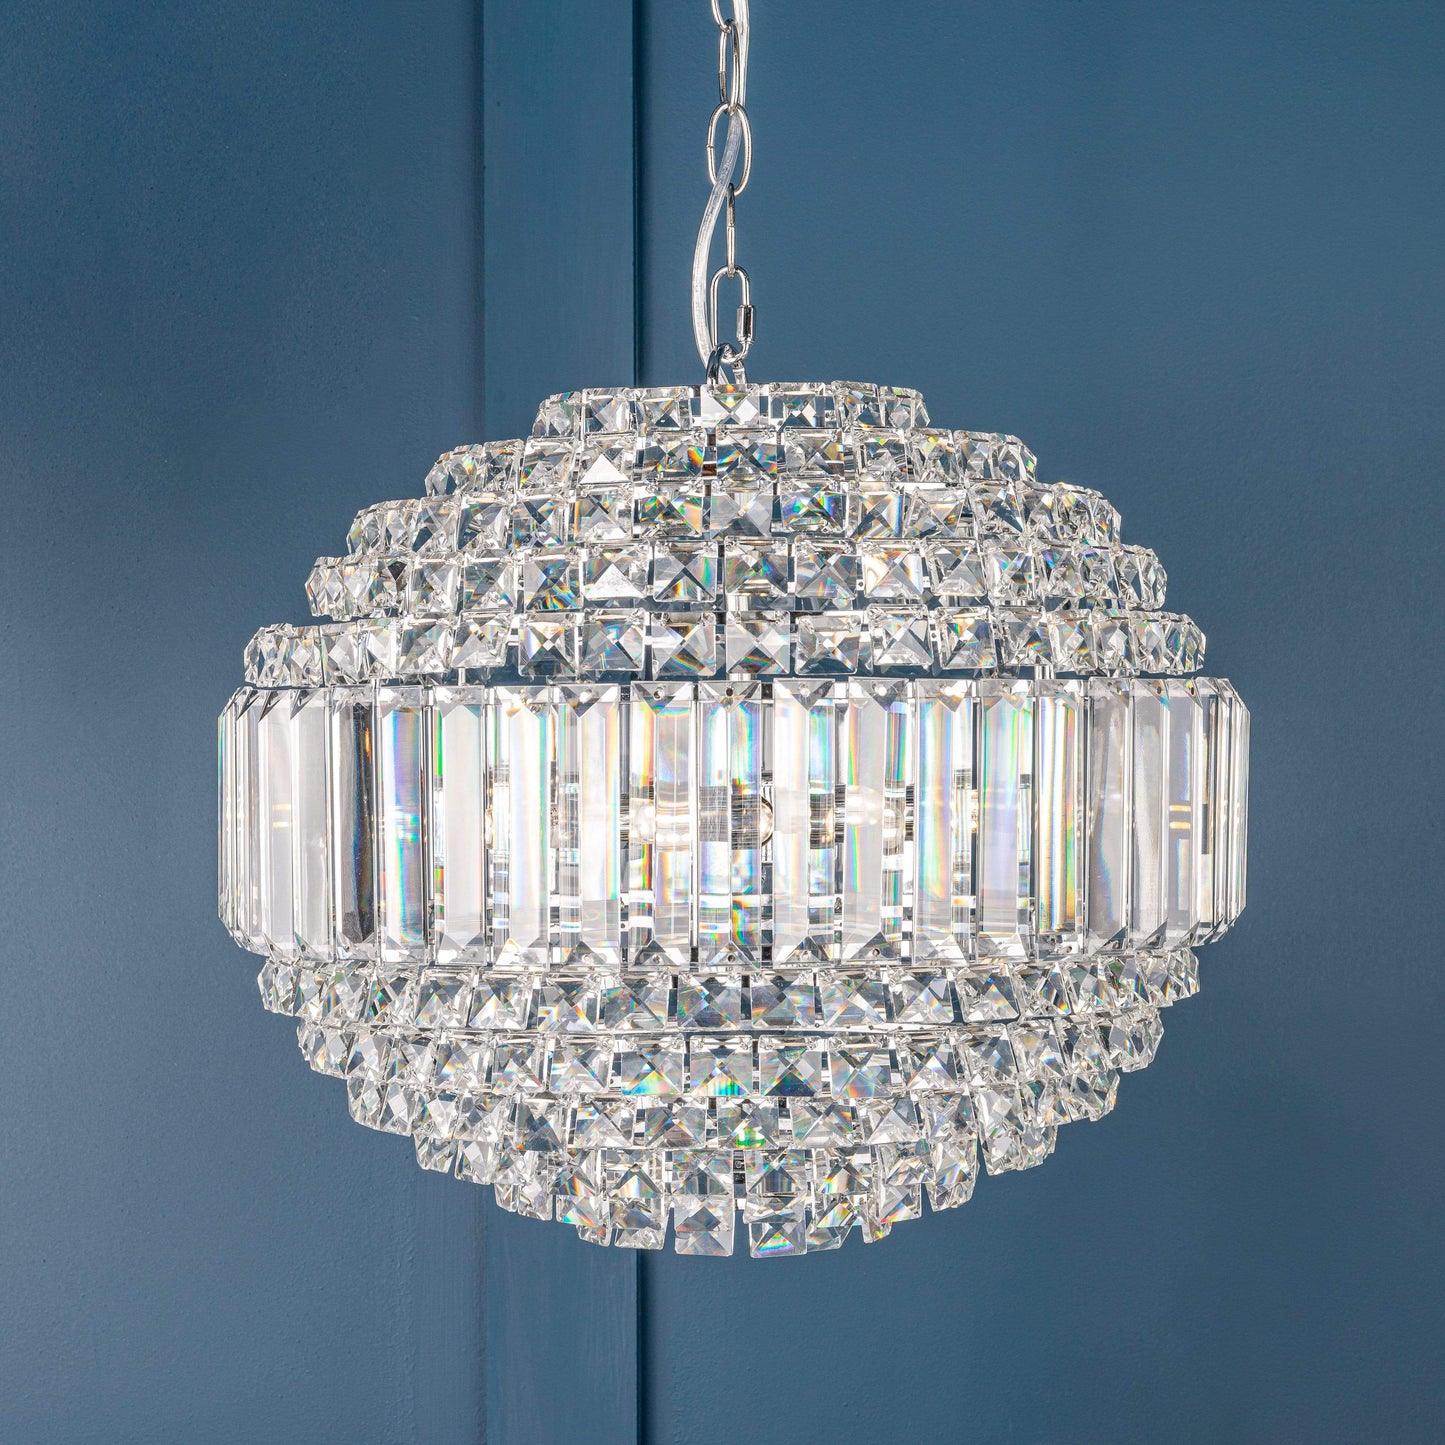 Lights  -  Laura Ashley Crystal & Polished Chrome 5 Light Orb Chandelier Ceiling Light  -  50155815